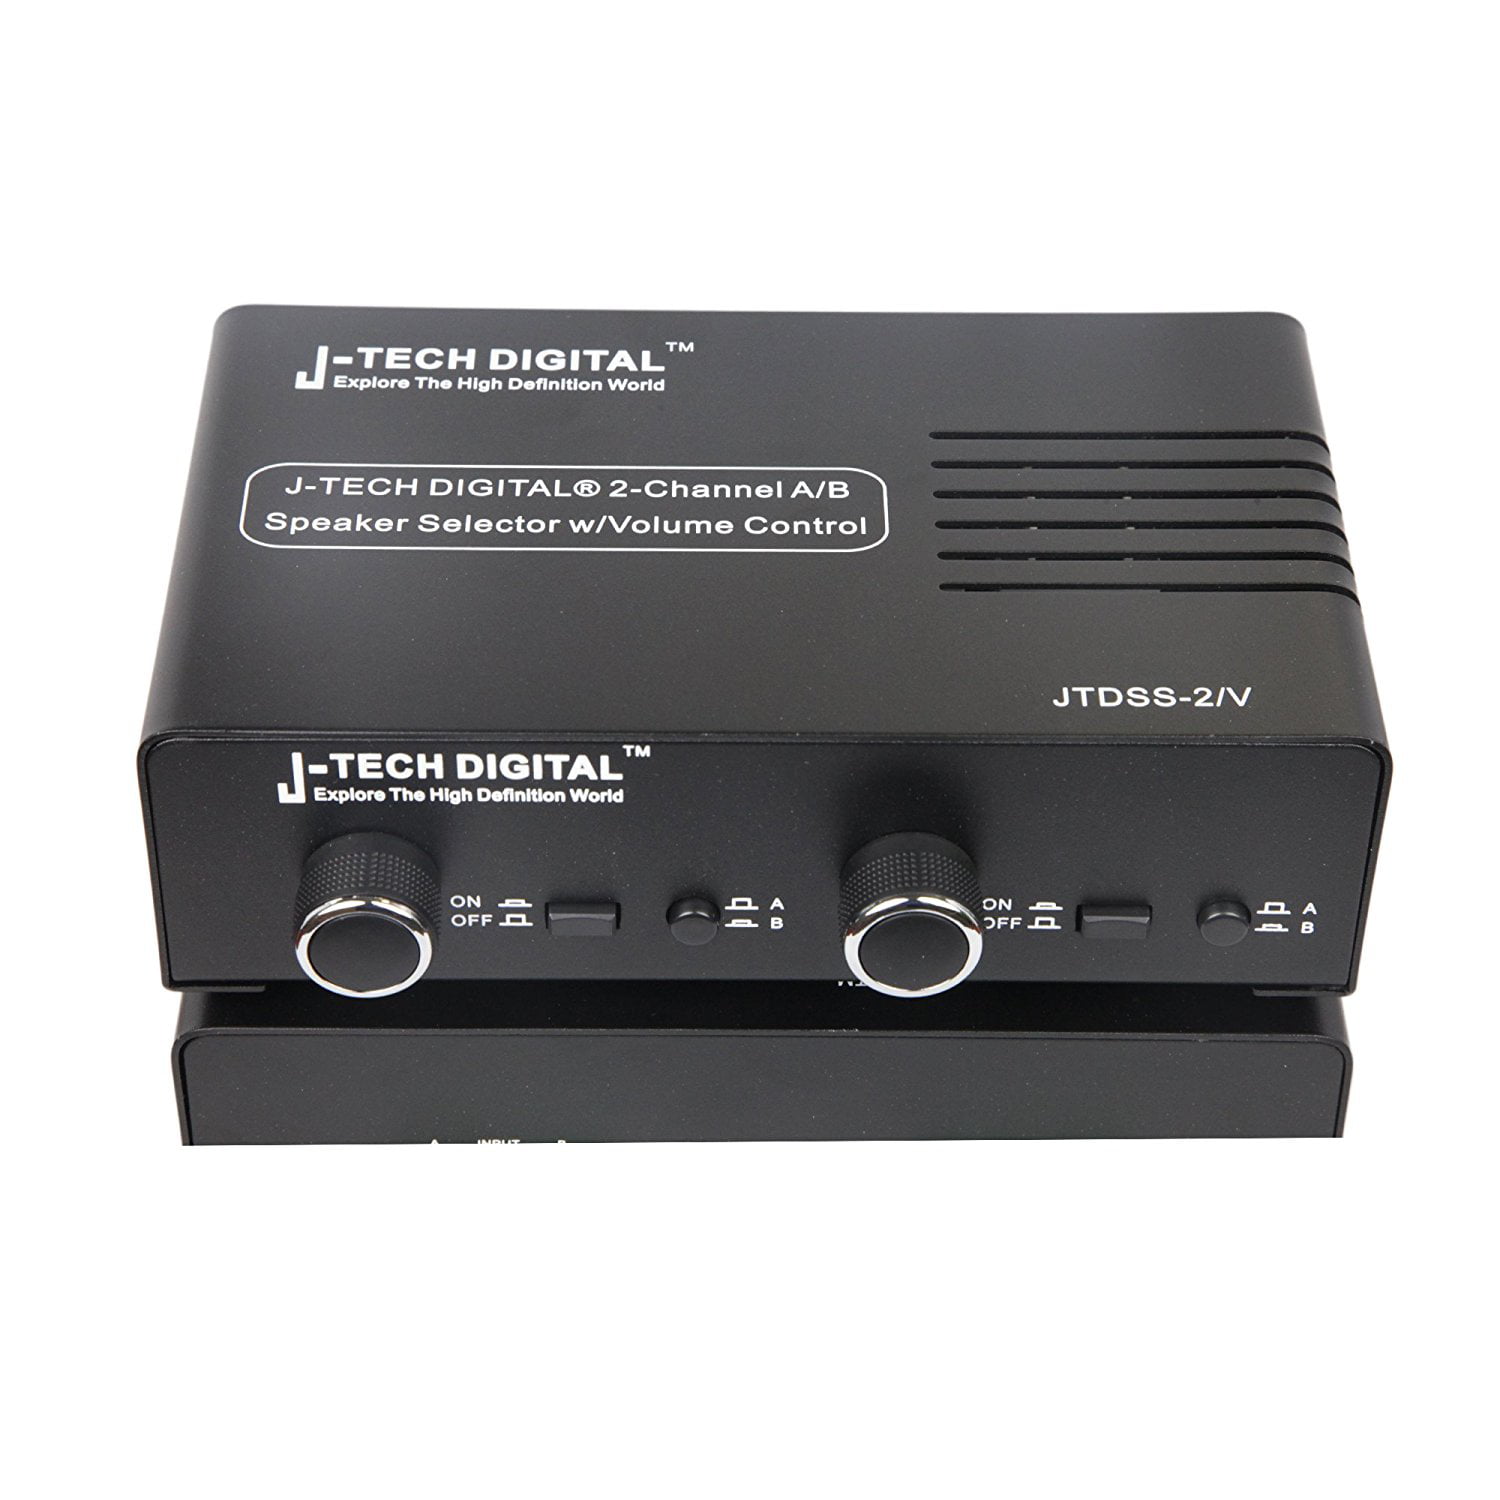 J-Tech Digital JTDSS-2/V 2-Channel A/B Speaker Selector with Volume Control